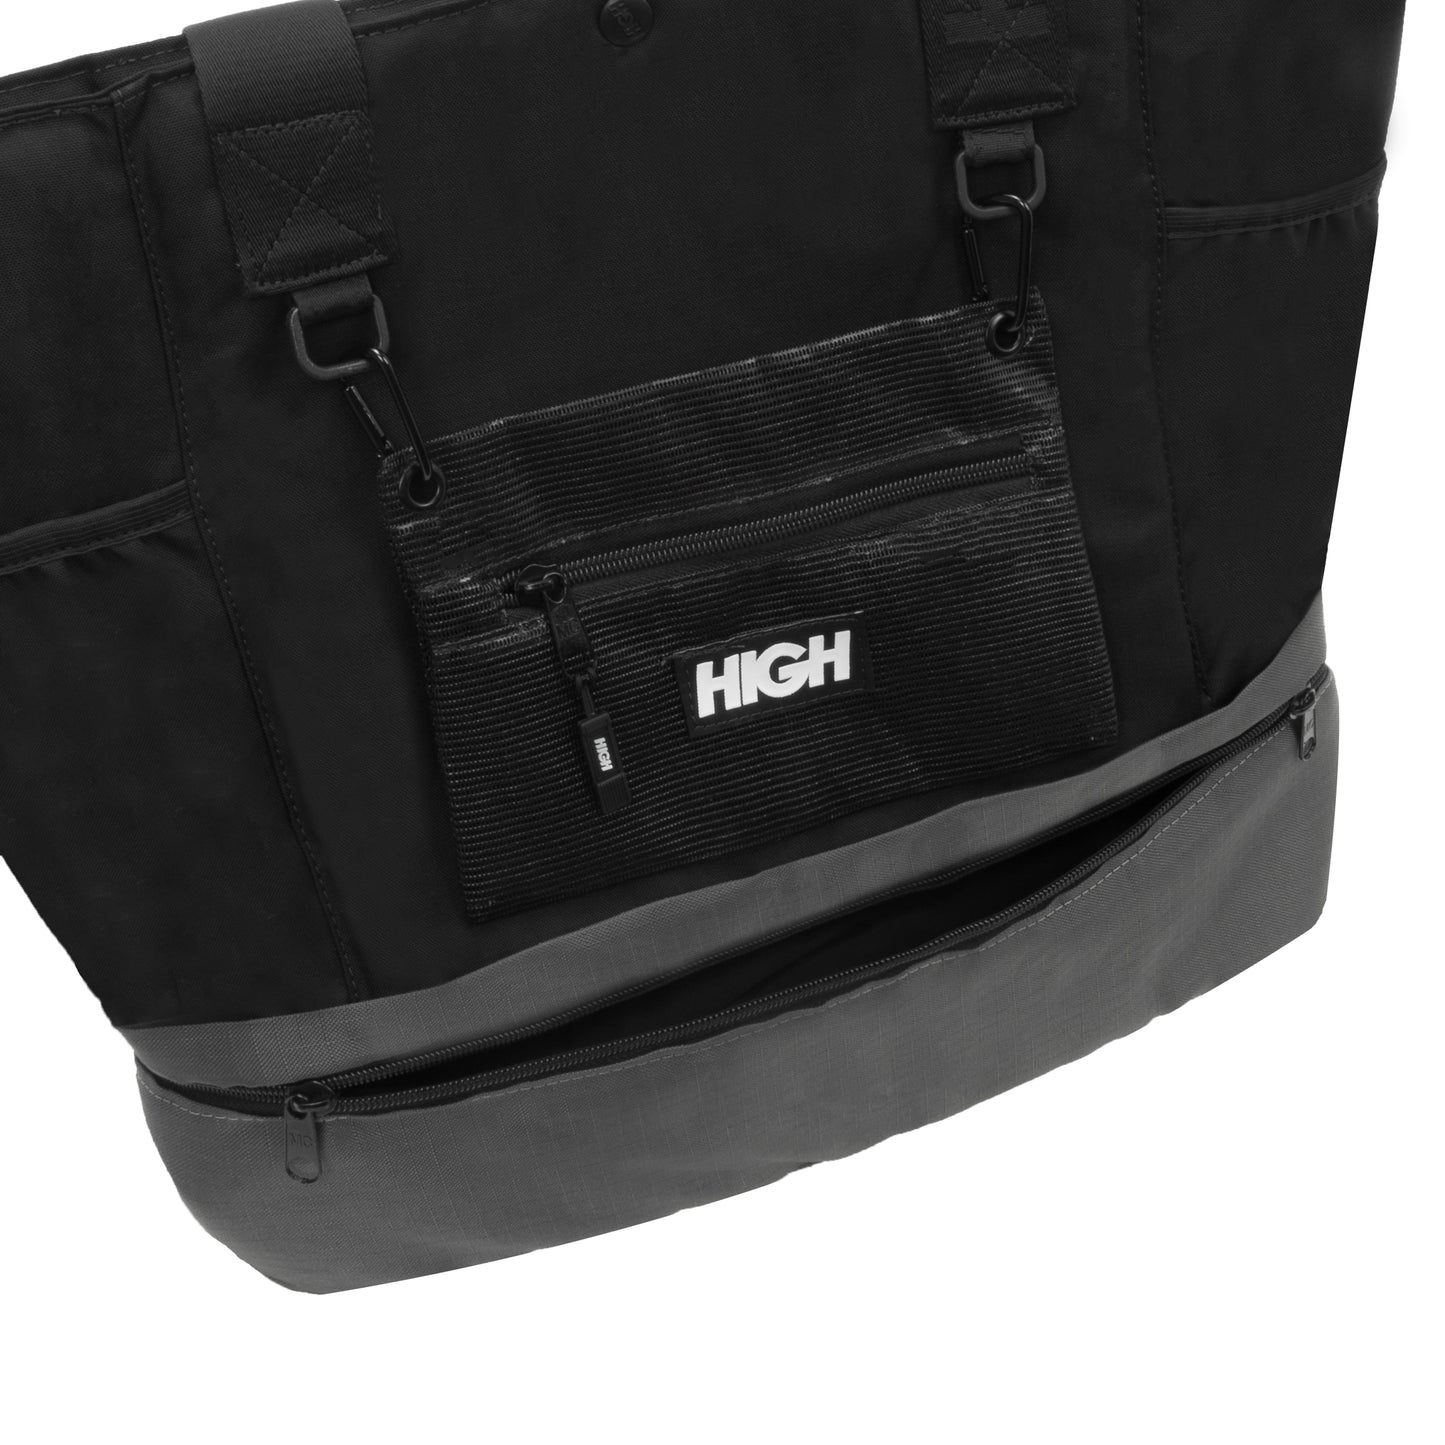 HIGH - Tote Bag Carrel Black